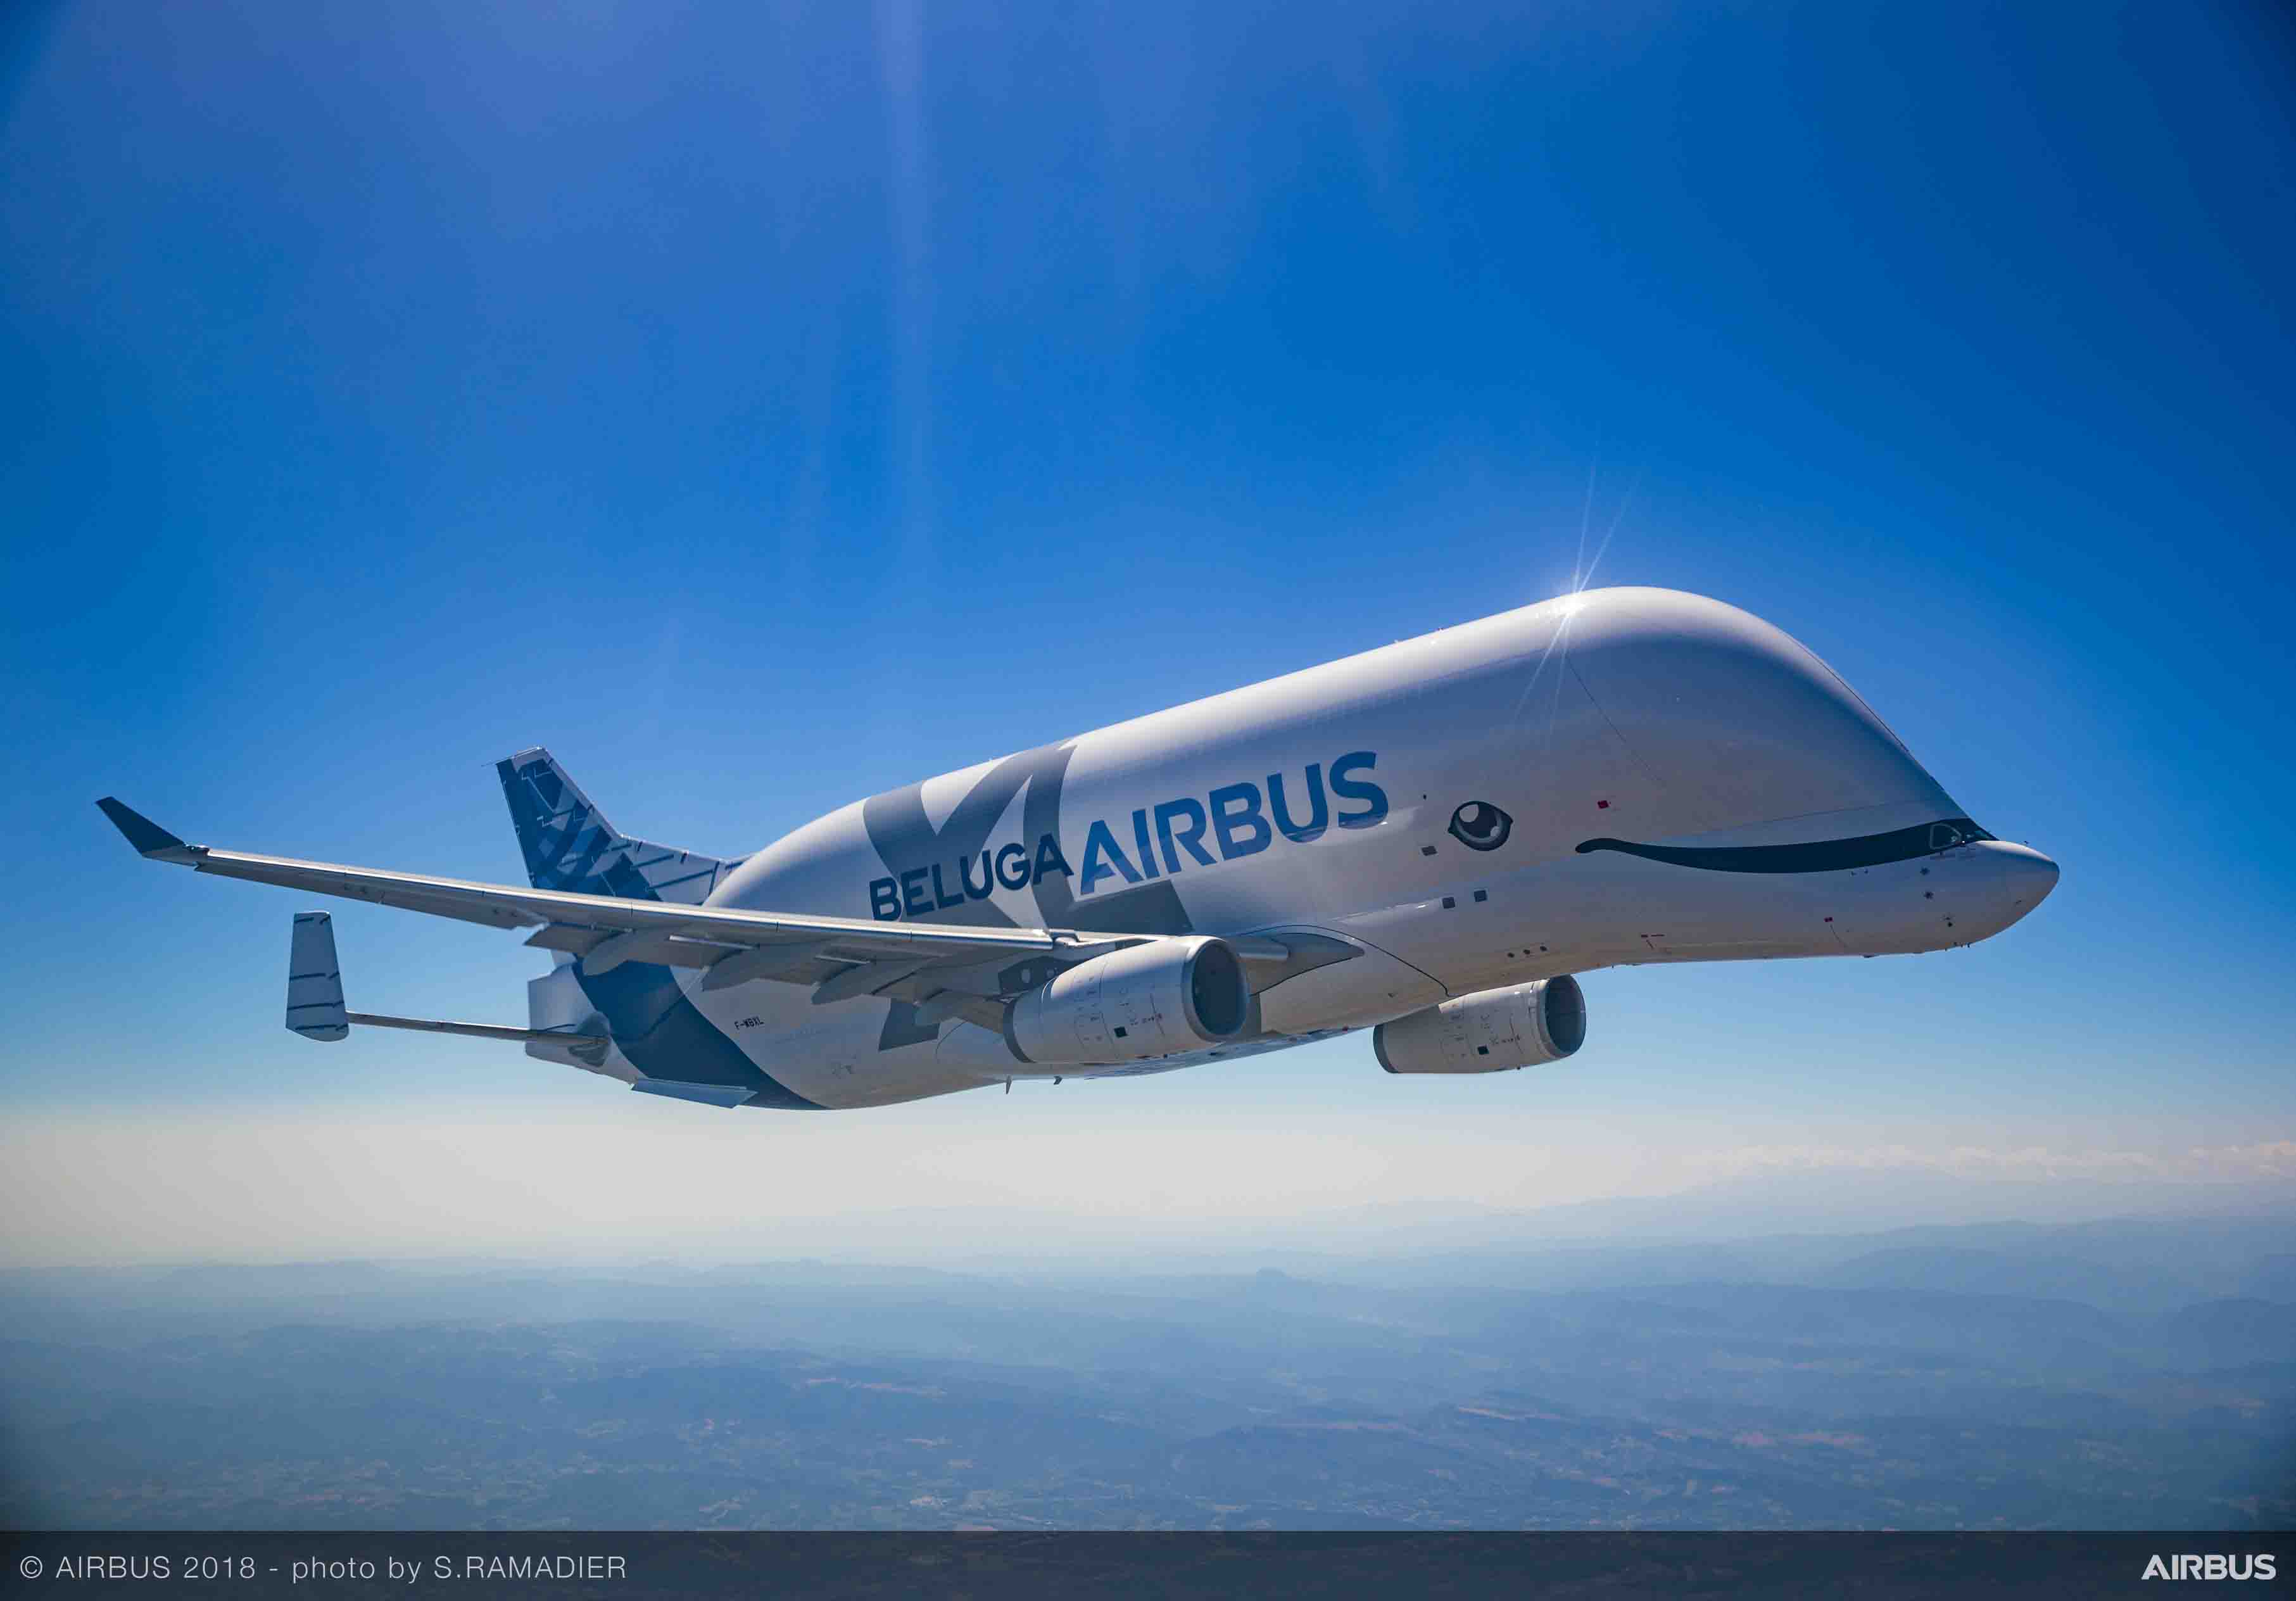 Airbus BelugaXL enters service, adding XL capacity to the fleet